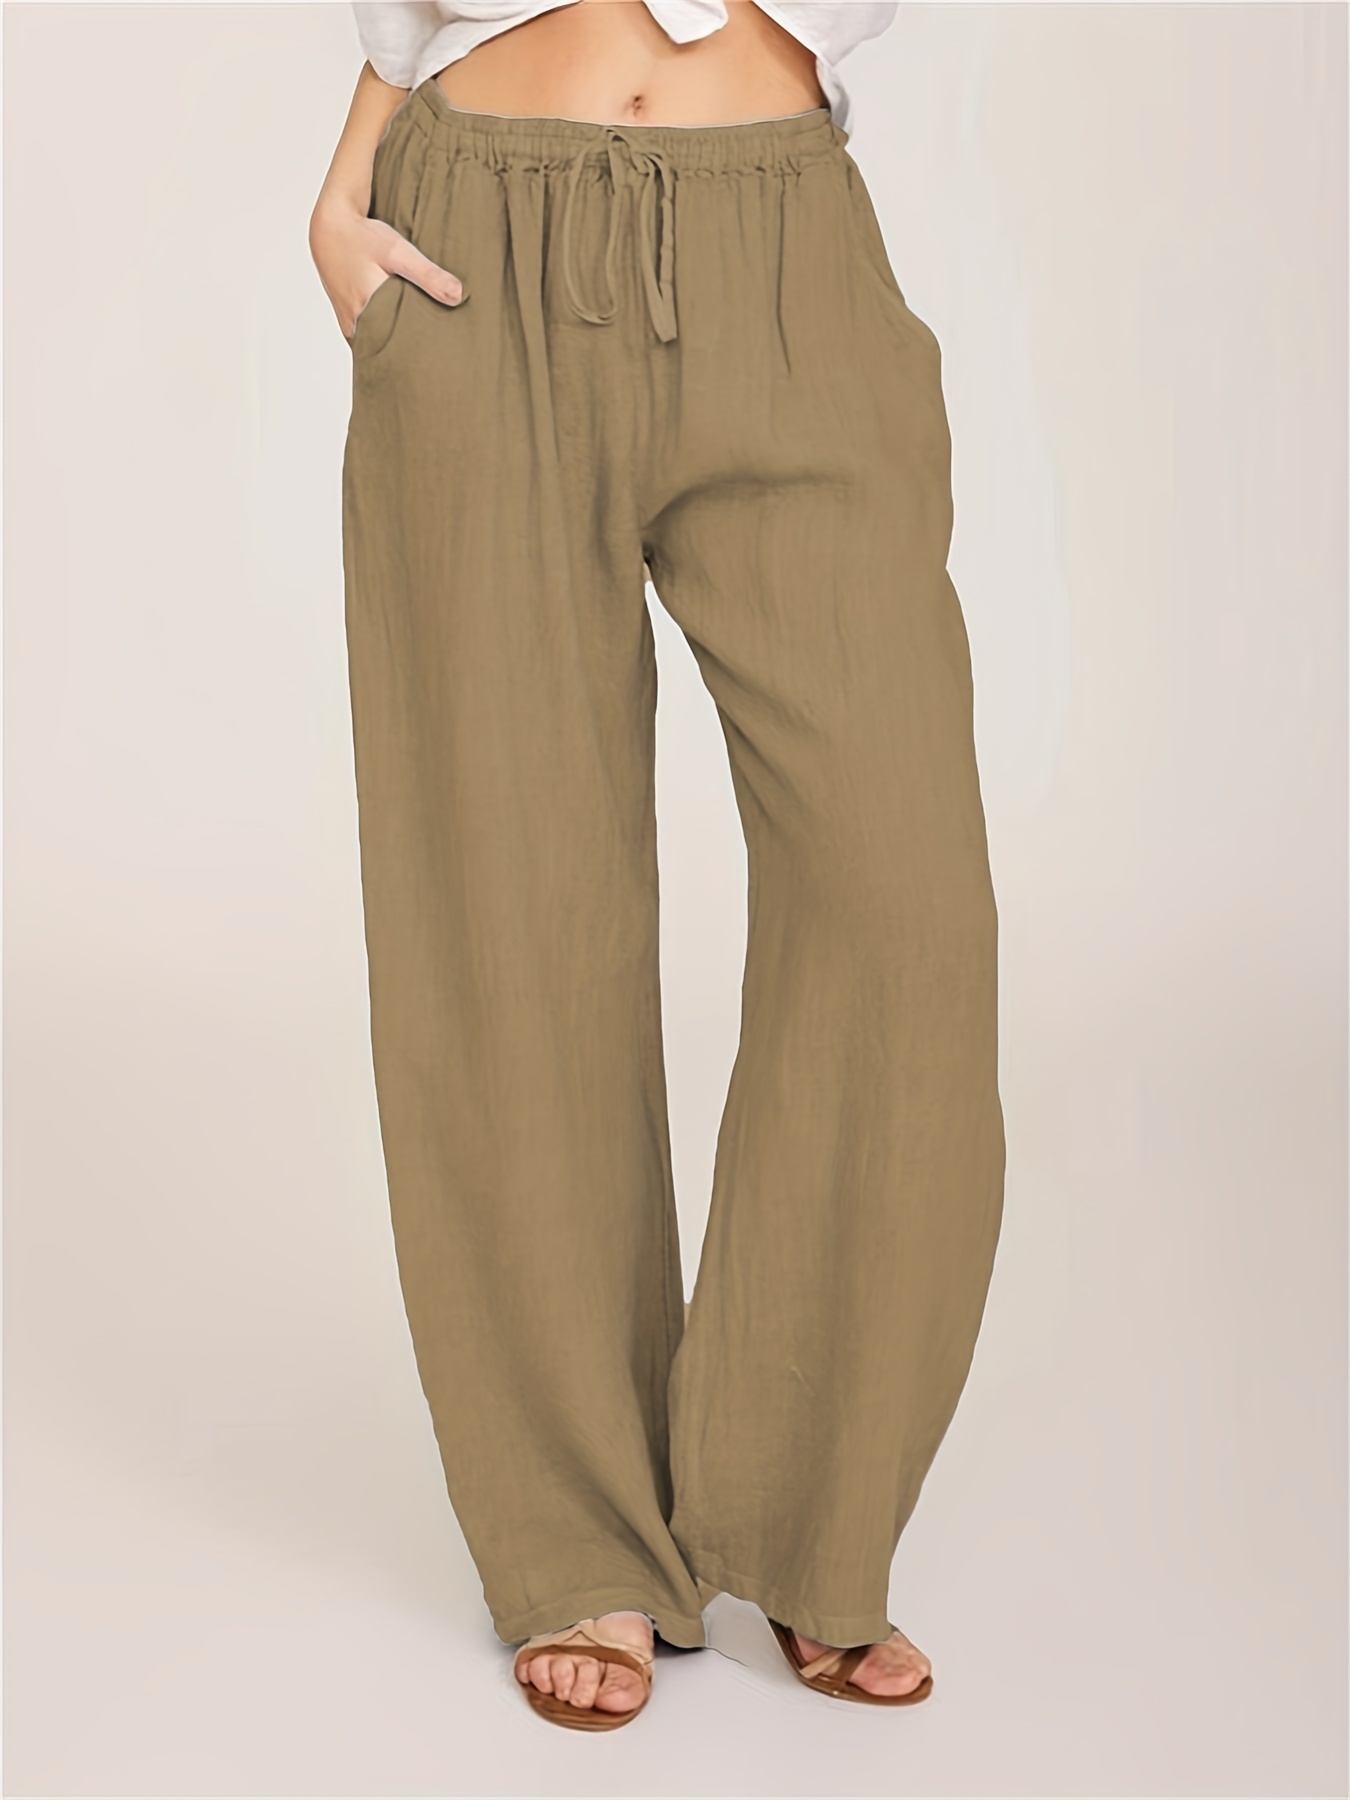 Pantalones de lino para mujer, pantalón de pierna ancha con cordón